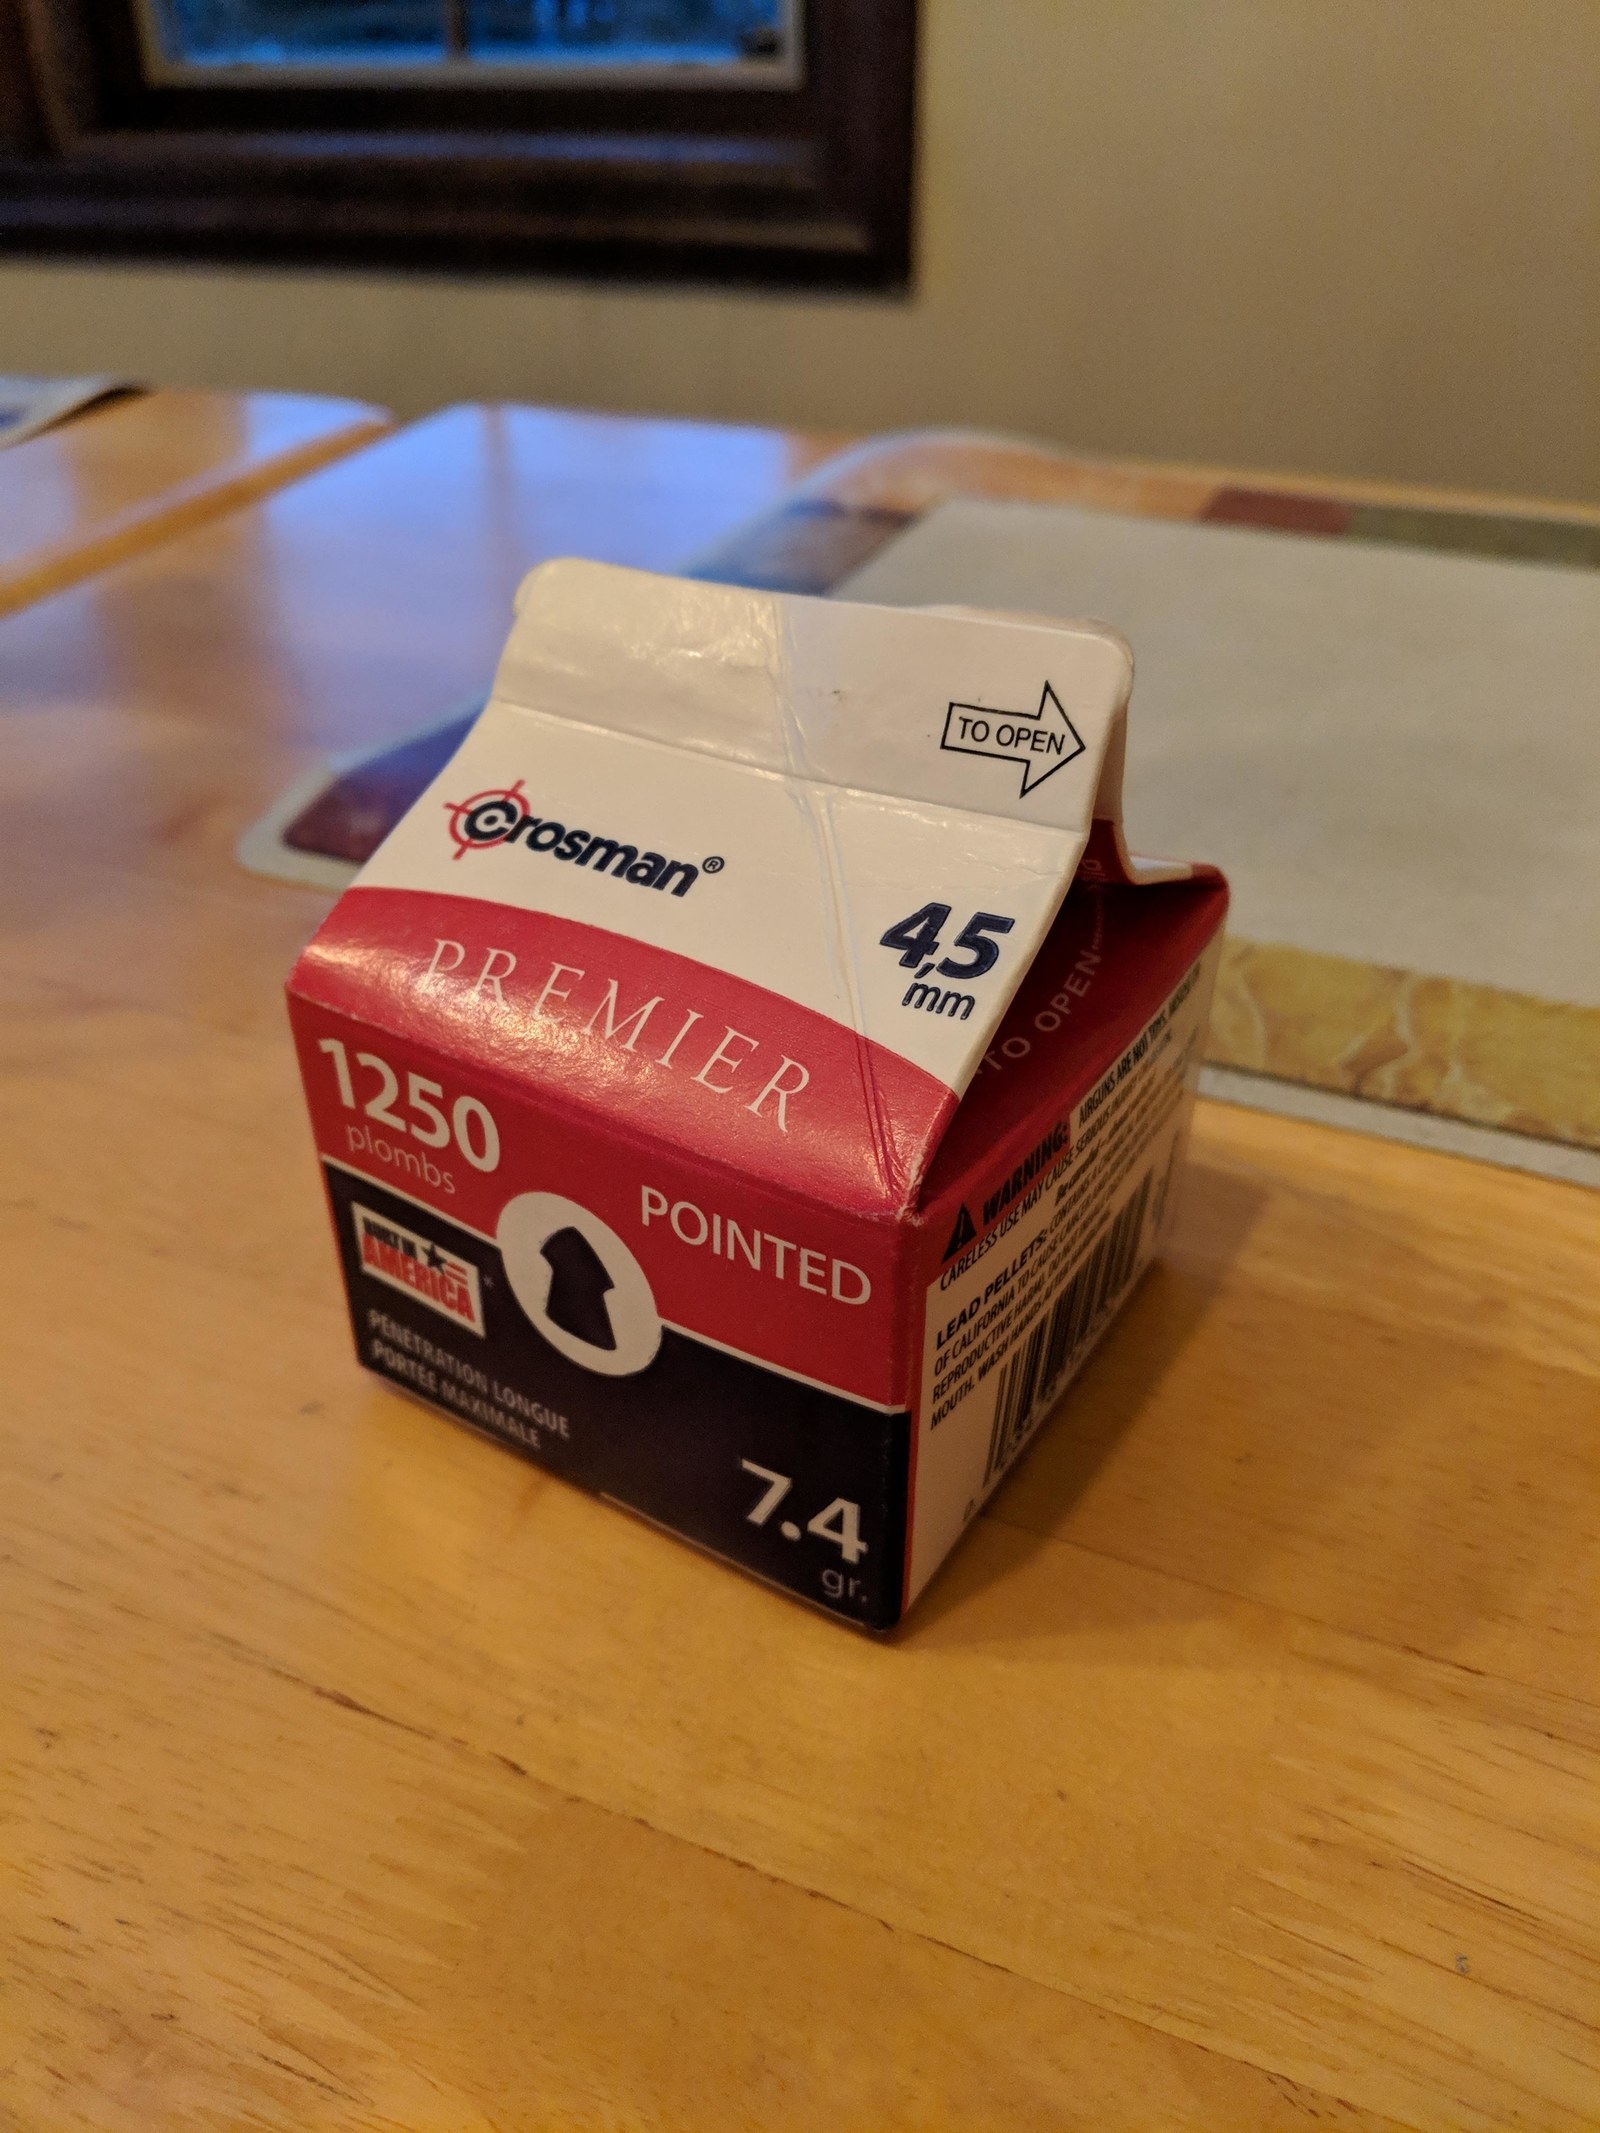 bullets in a carton that looks like a milk carton